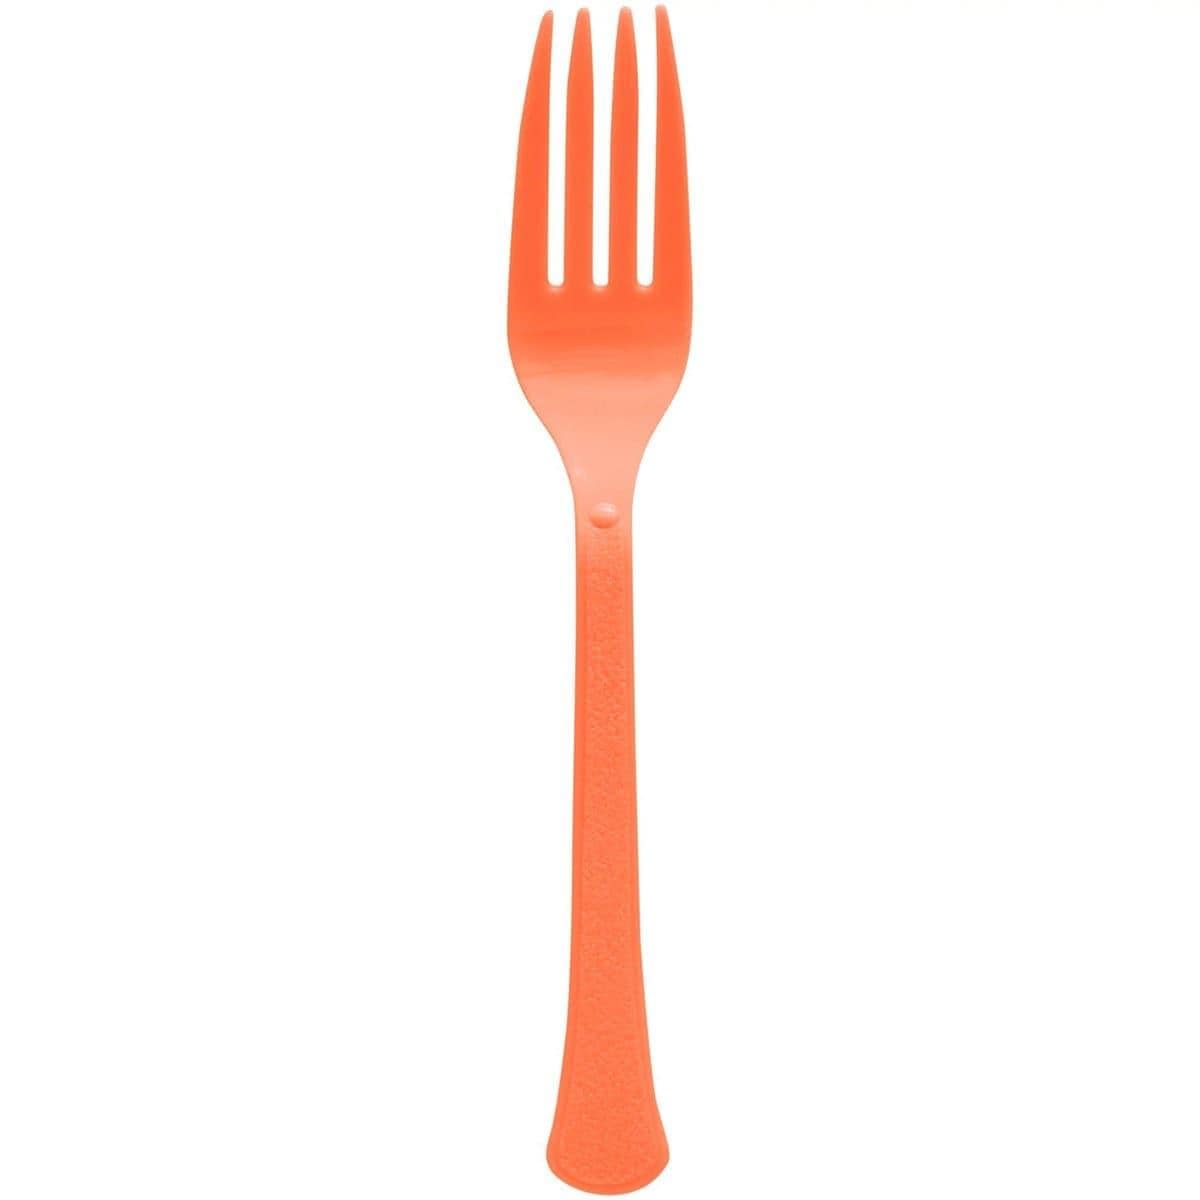 Buy Plasticware Orange Peel Plastic Forks, 20 Count sold at Party Expert